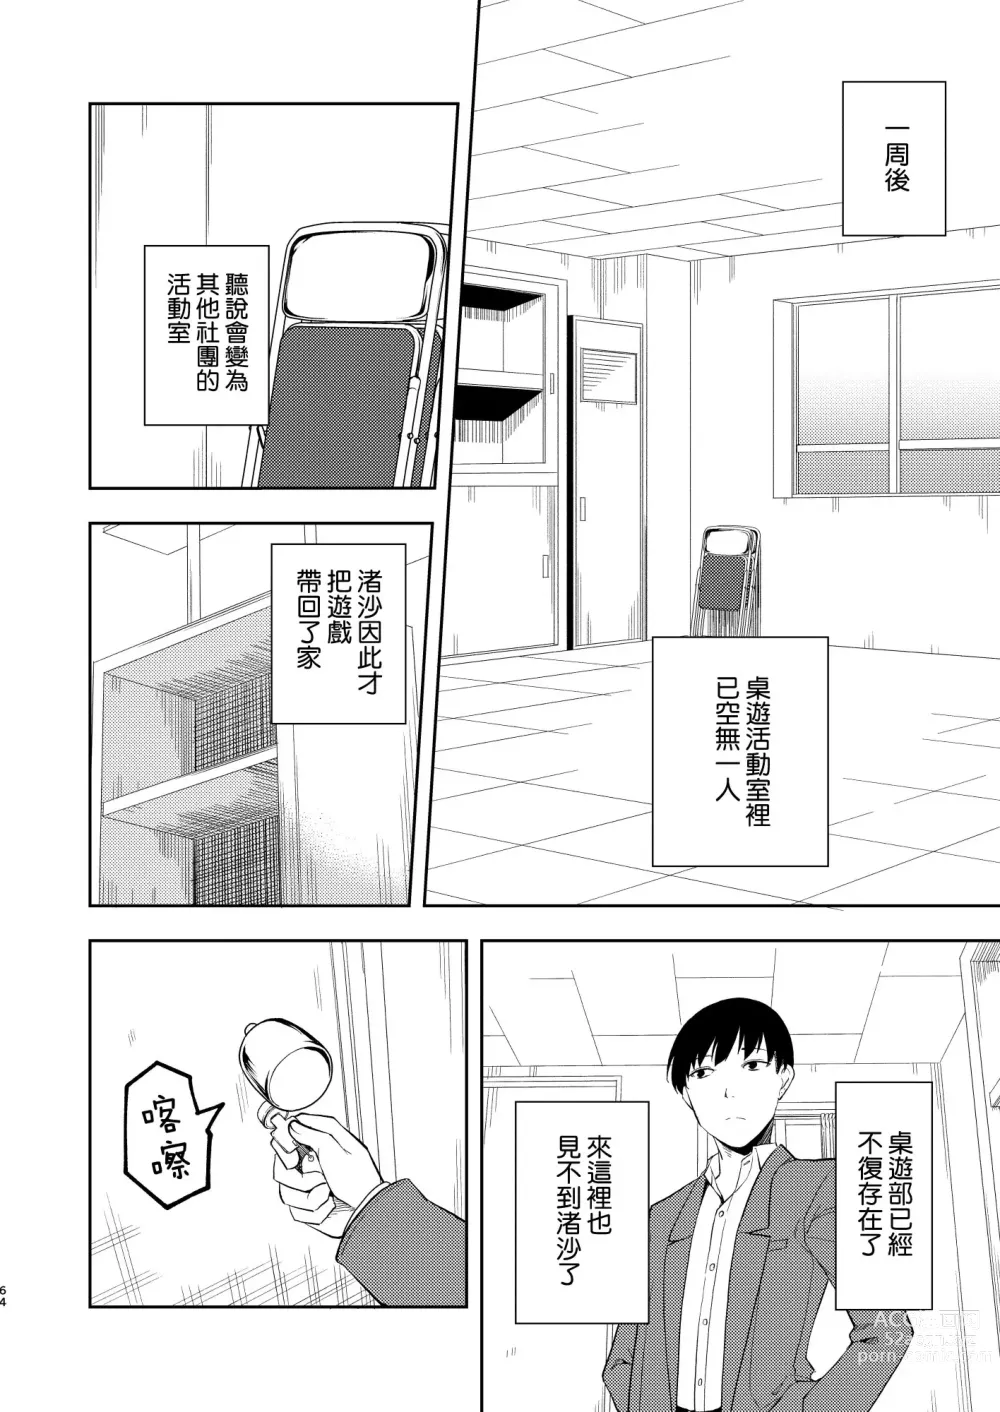 Page 66 of doujinshi Nagisa Lingerie